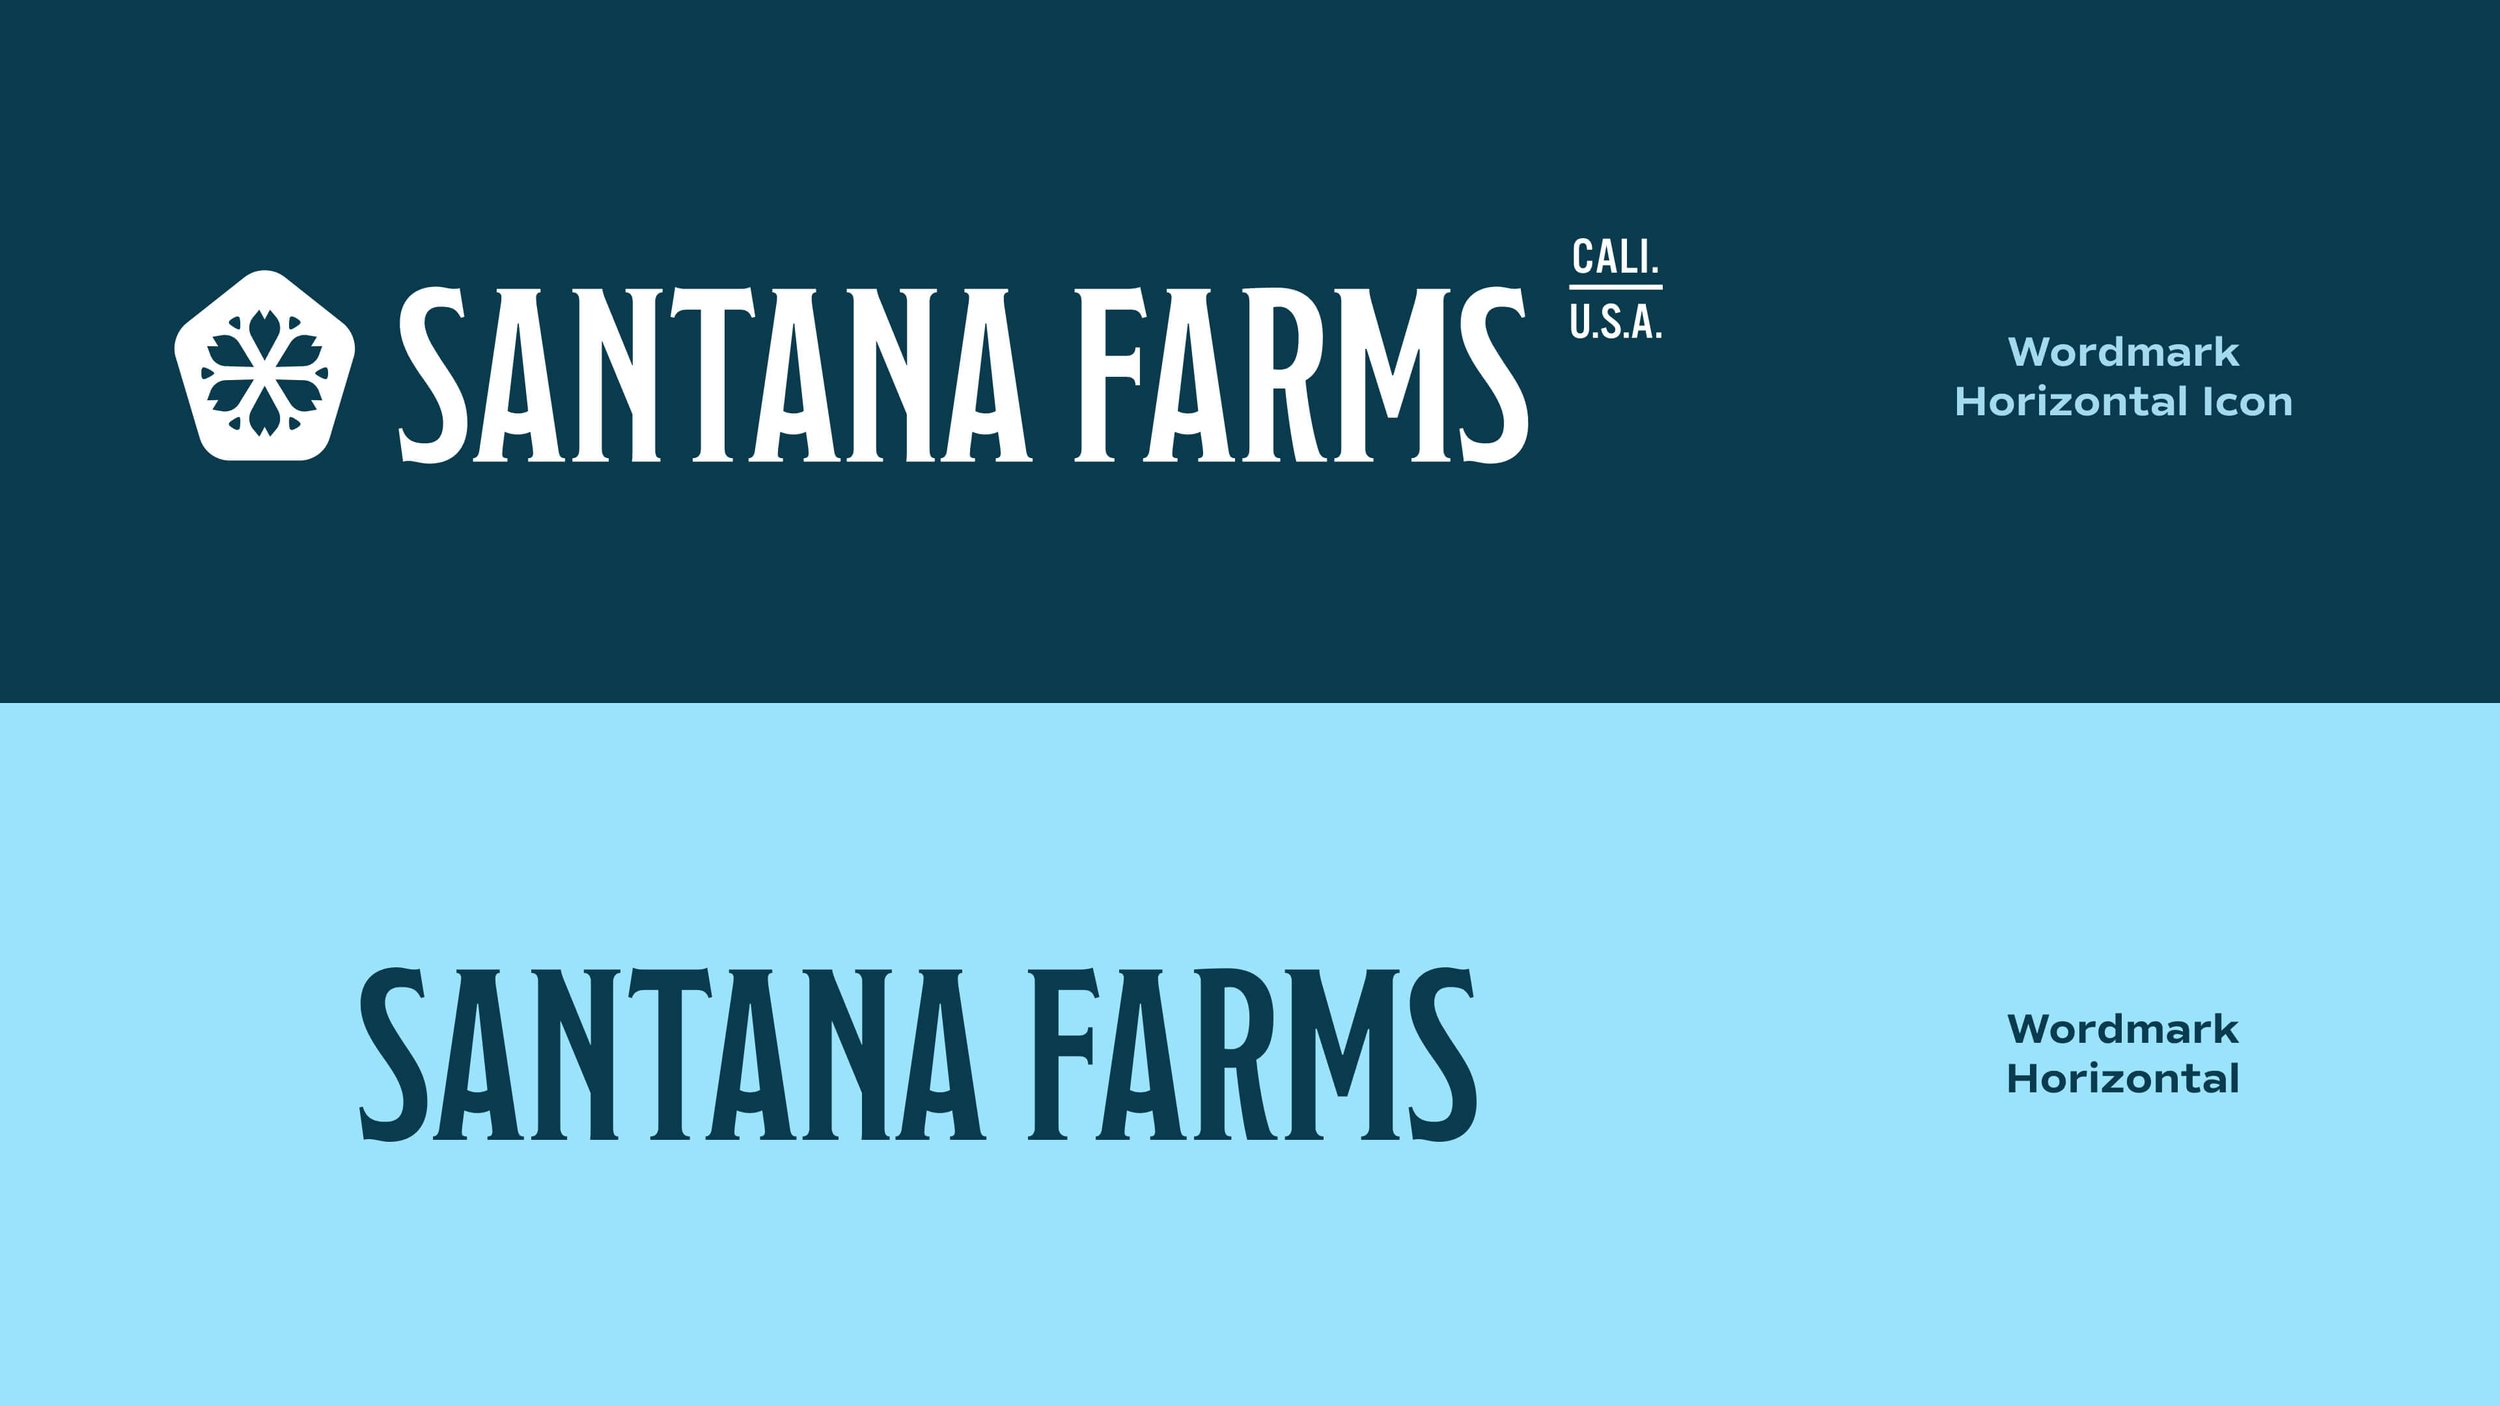 Doc-Reed-Brand-Designer-NC-Charlotte-Santana Farms Wordmark Horizontal.jpg